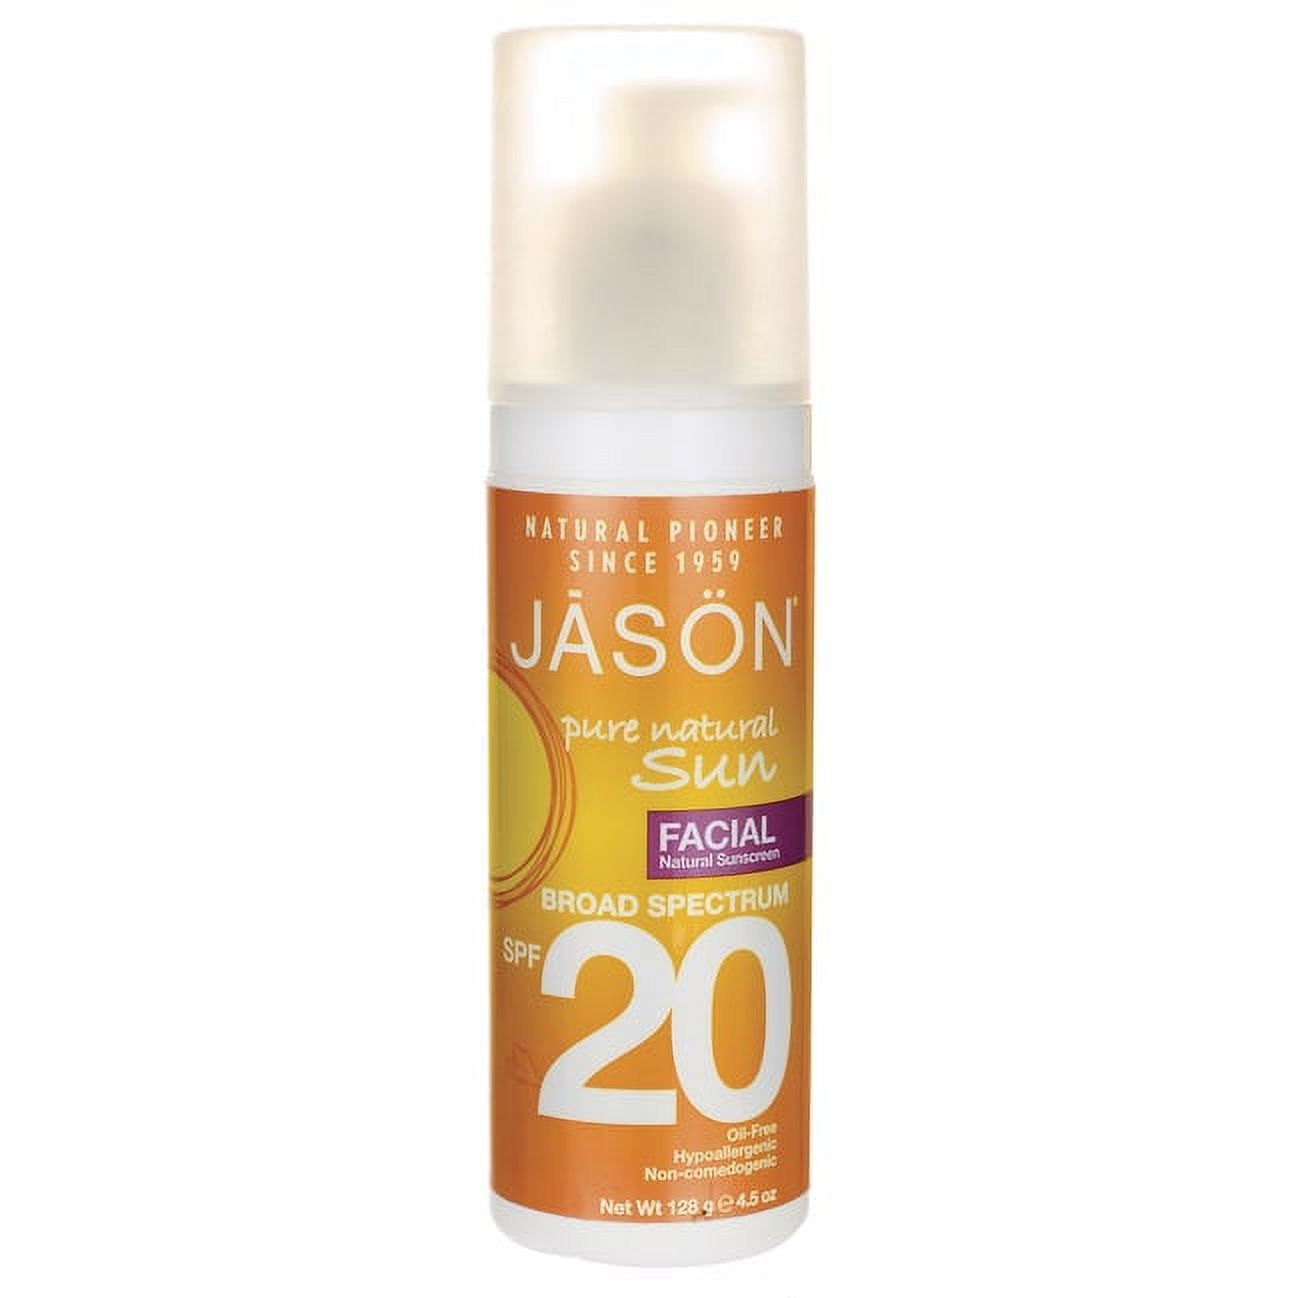 JASON Oil-Free SPF 20 Facial Sunscreen, 4.5 oz. - image 1 of 3